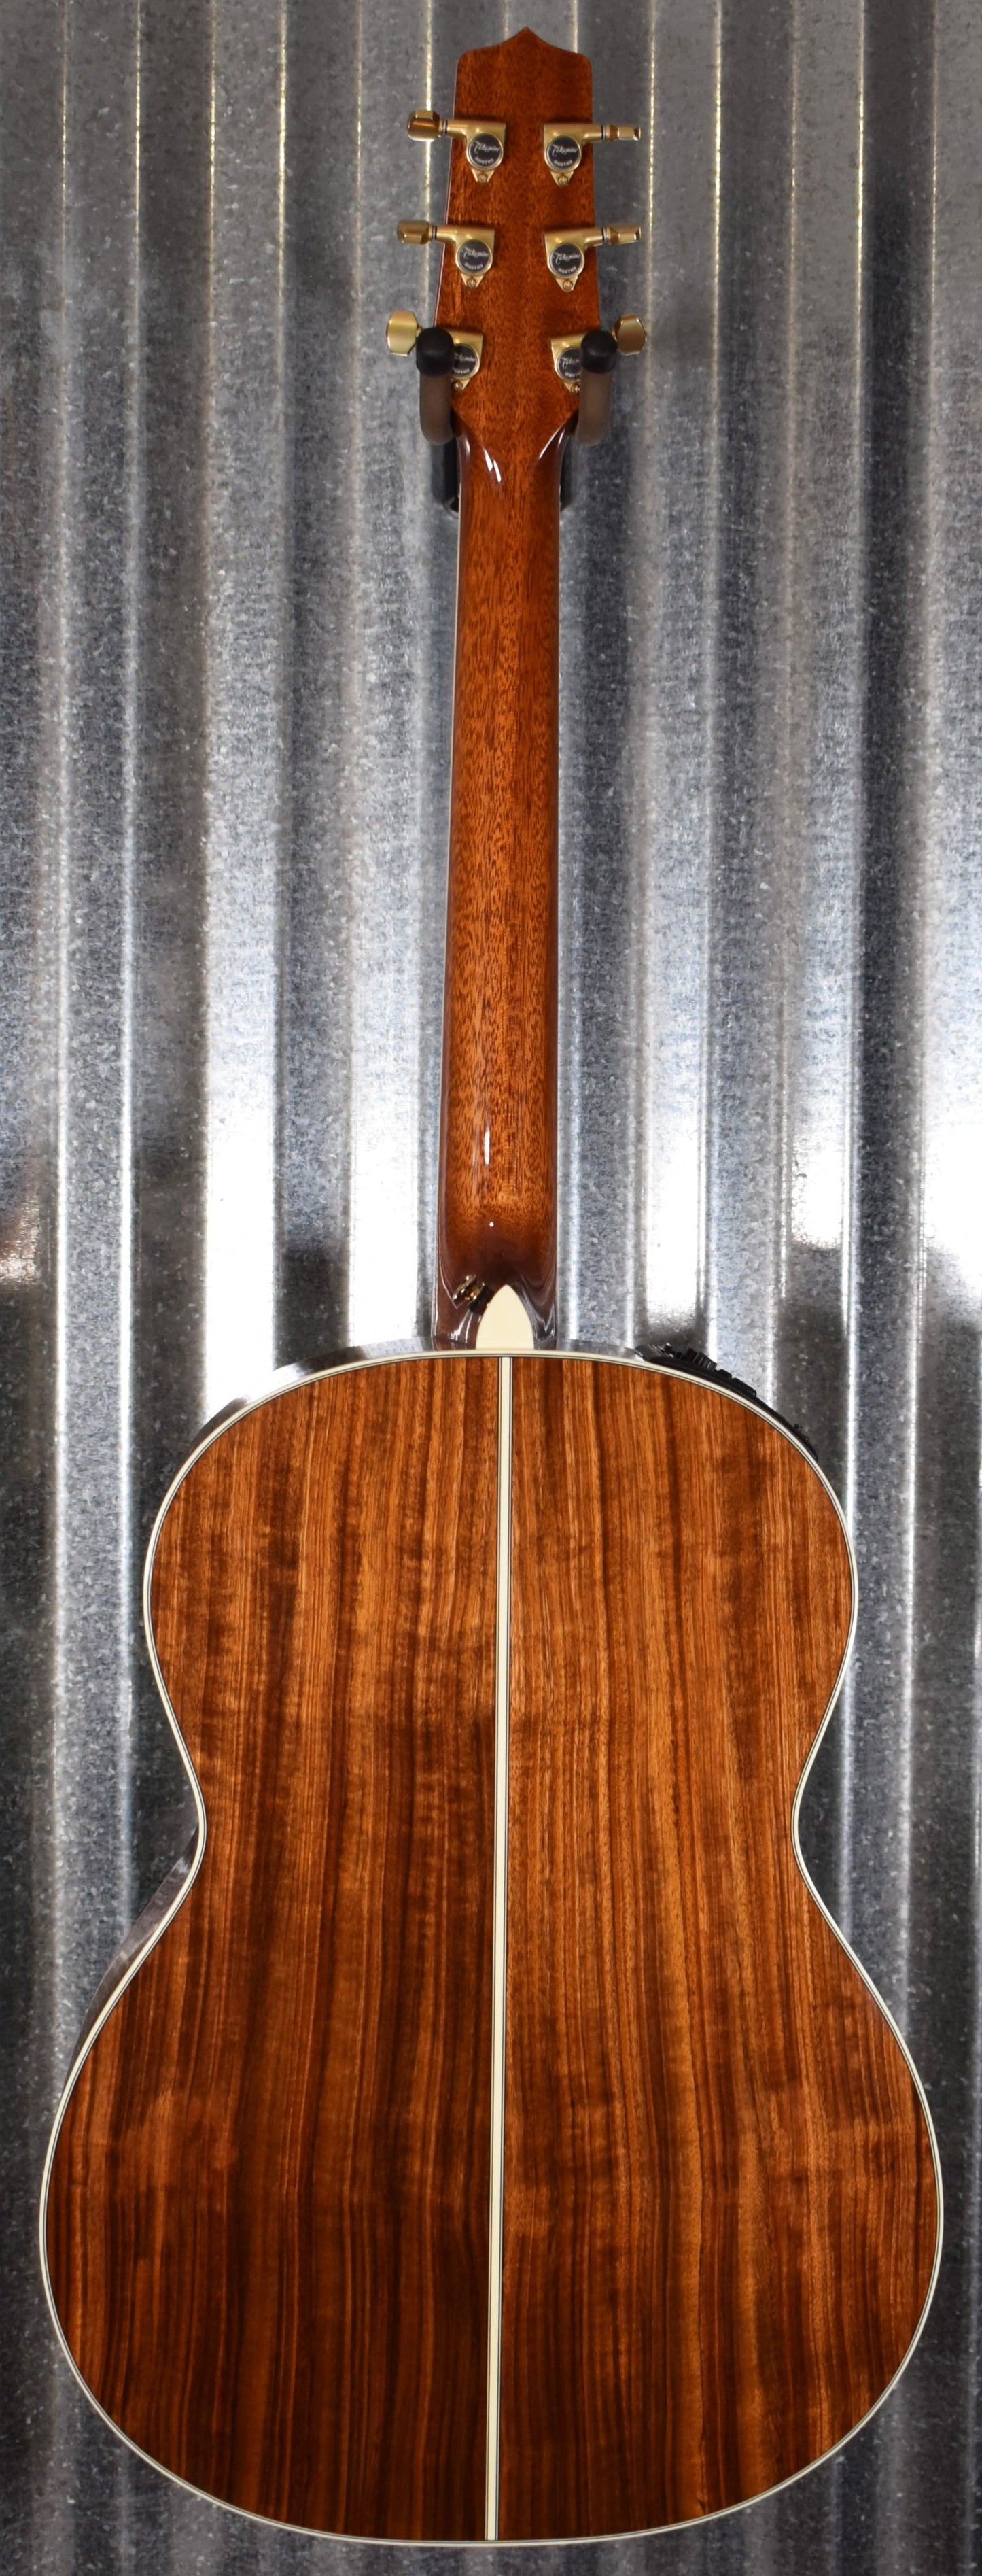 Takamine Limited Edition 2020 Peace Green Tea Acoustic Electric Guitar & Case LTD2020PEACE #0512 Used